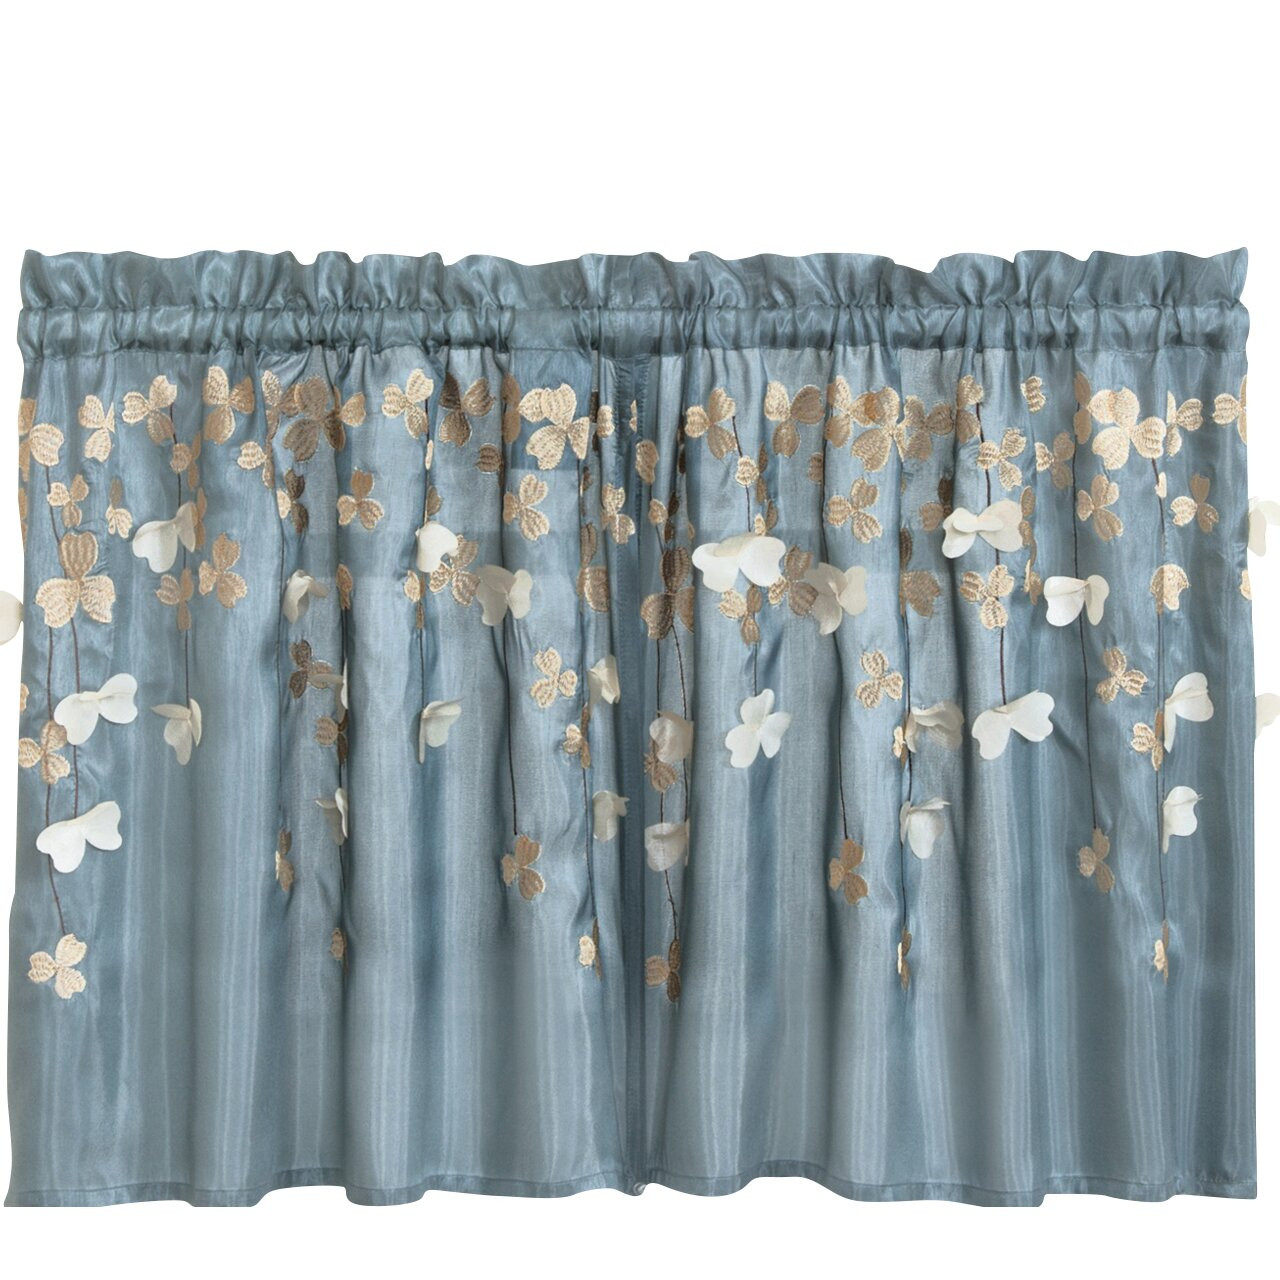 Kitchen Curtains Tier
 Lush Decor Flower Kitchen Light filtering Tier Curtain